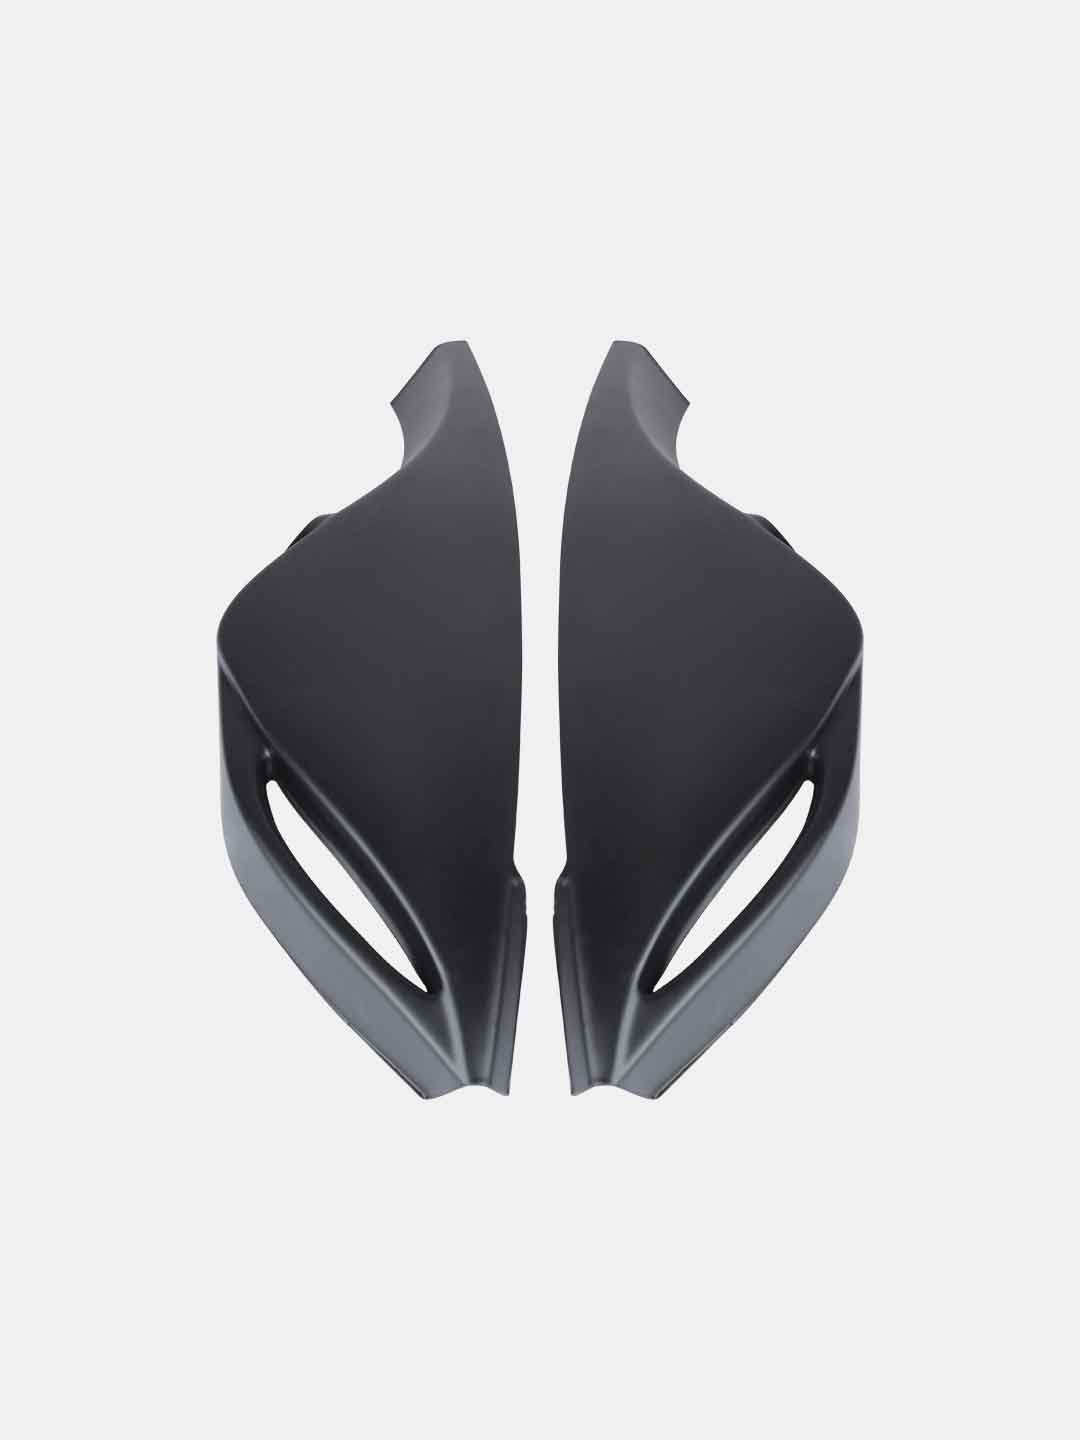 Yamaha R15 V3 Dark Knight Windscreen Fairing Kit